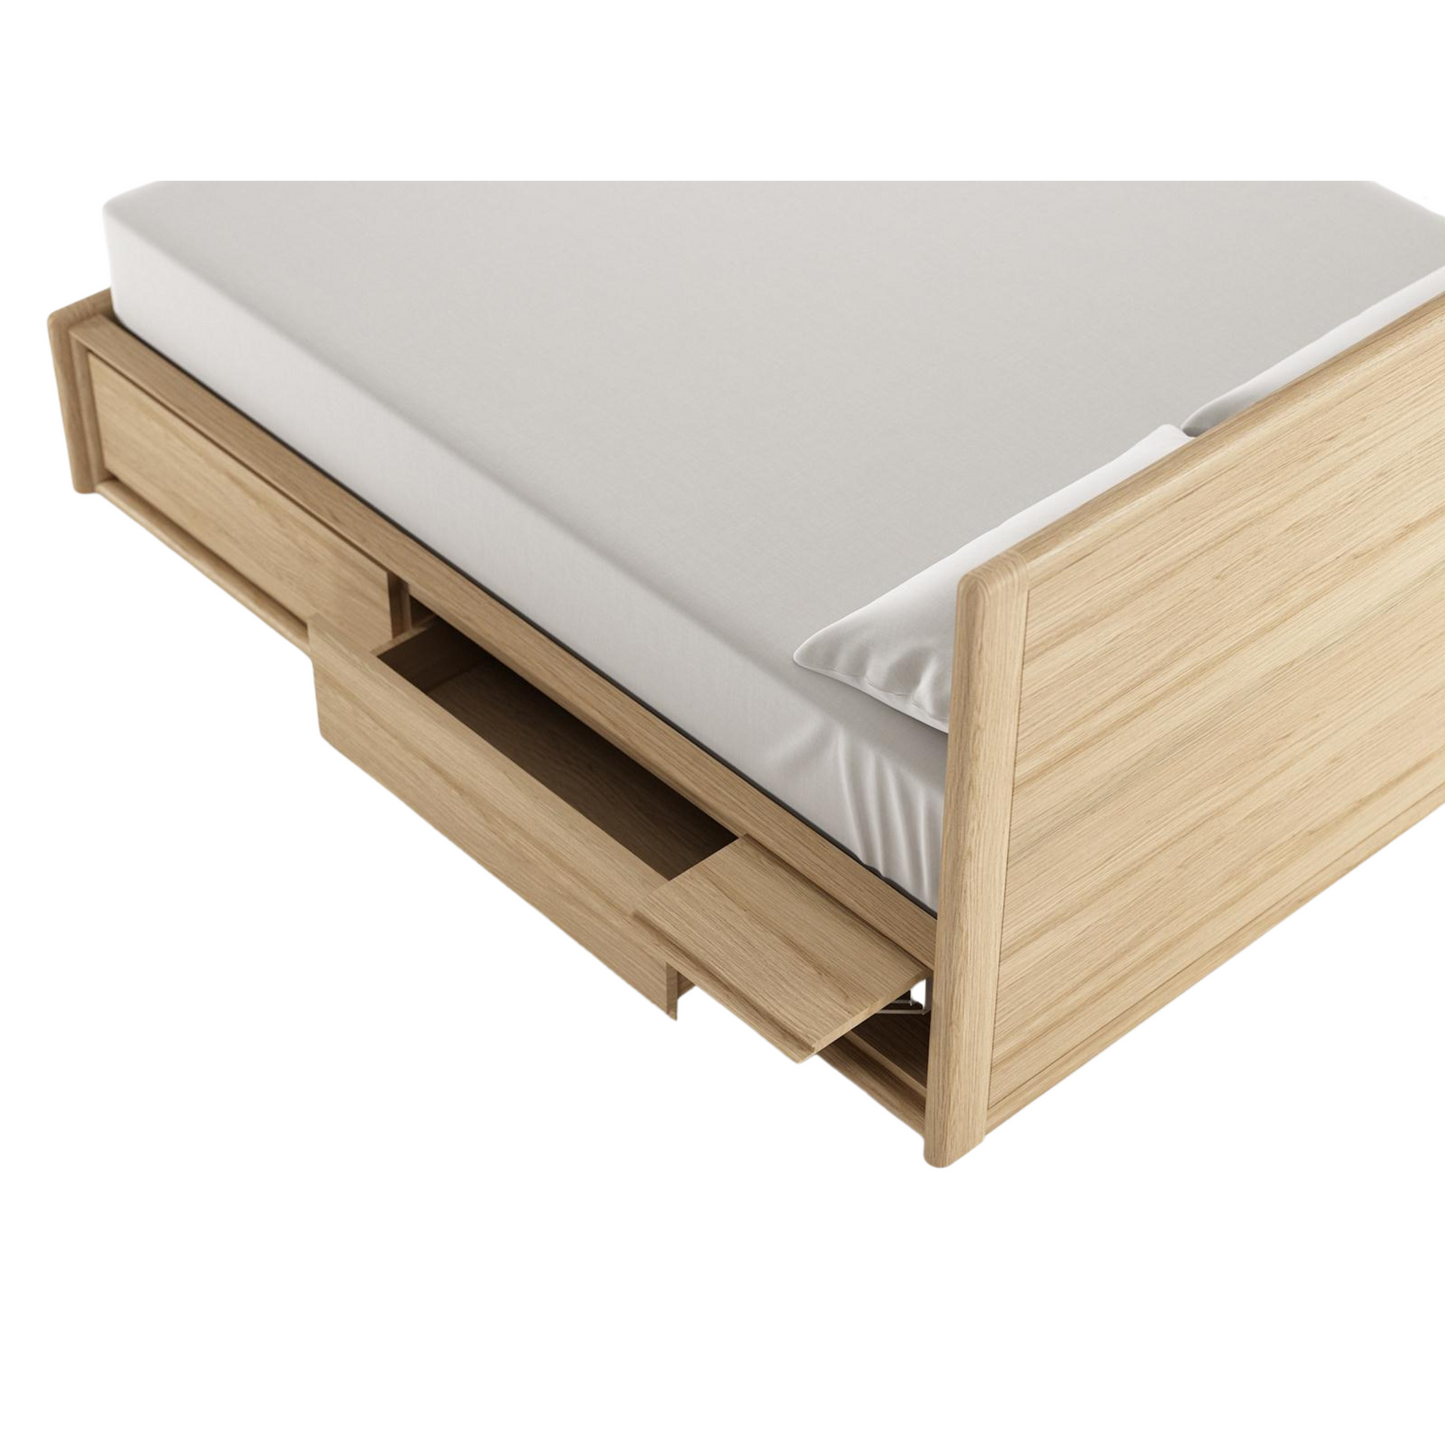 Circa Queen Bed with Fabric Headboard - European Oak